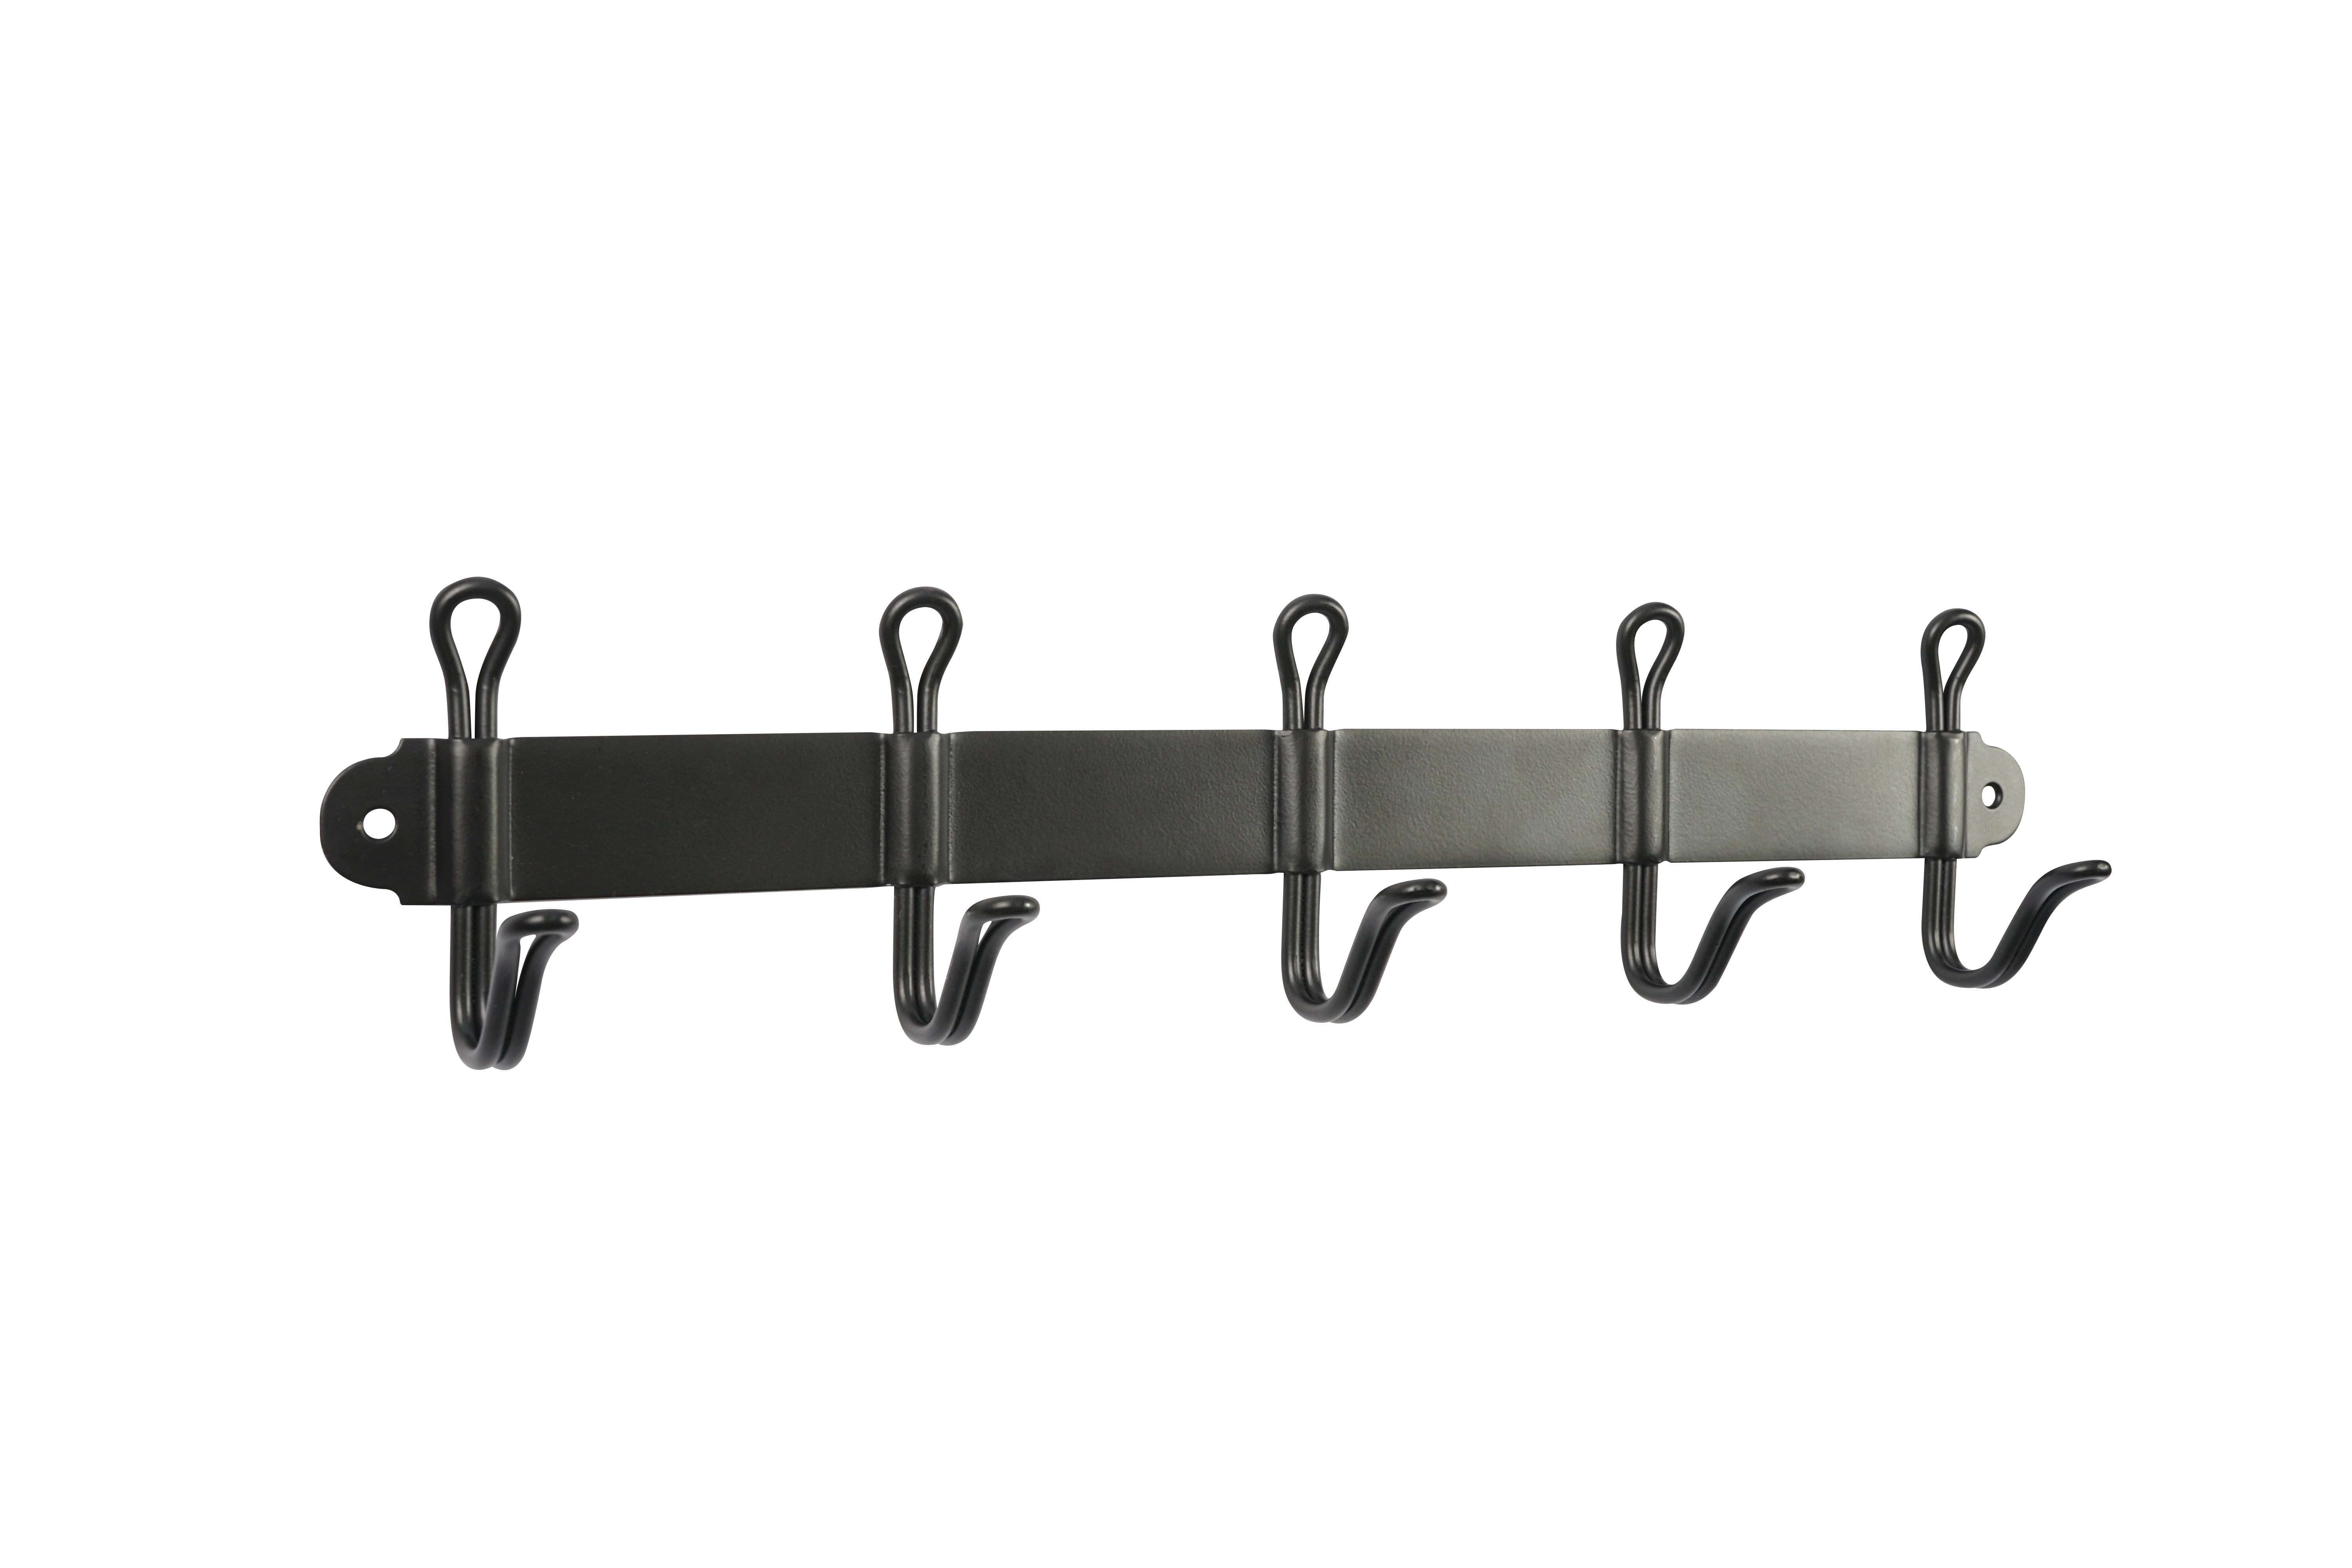 Mainstays 14 1/2 in. Wall Mounted Metal Hook Rack, 5 Single Hooks, Matte Black